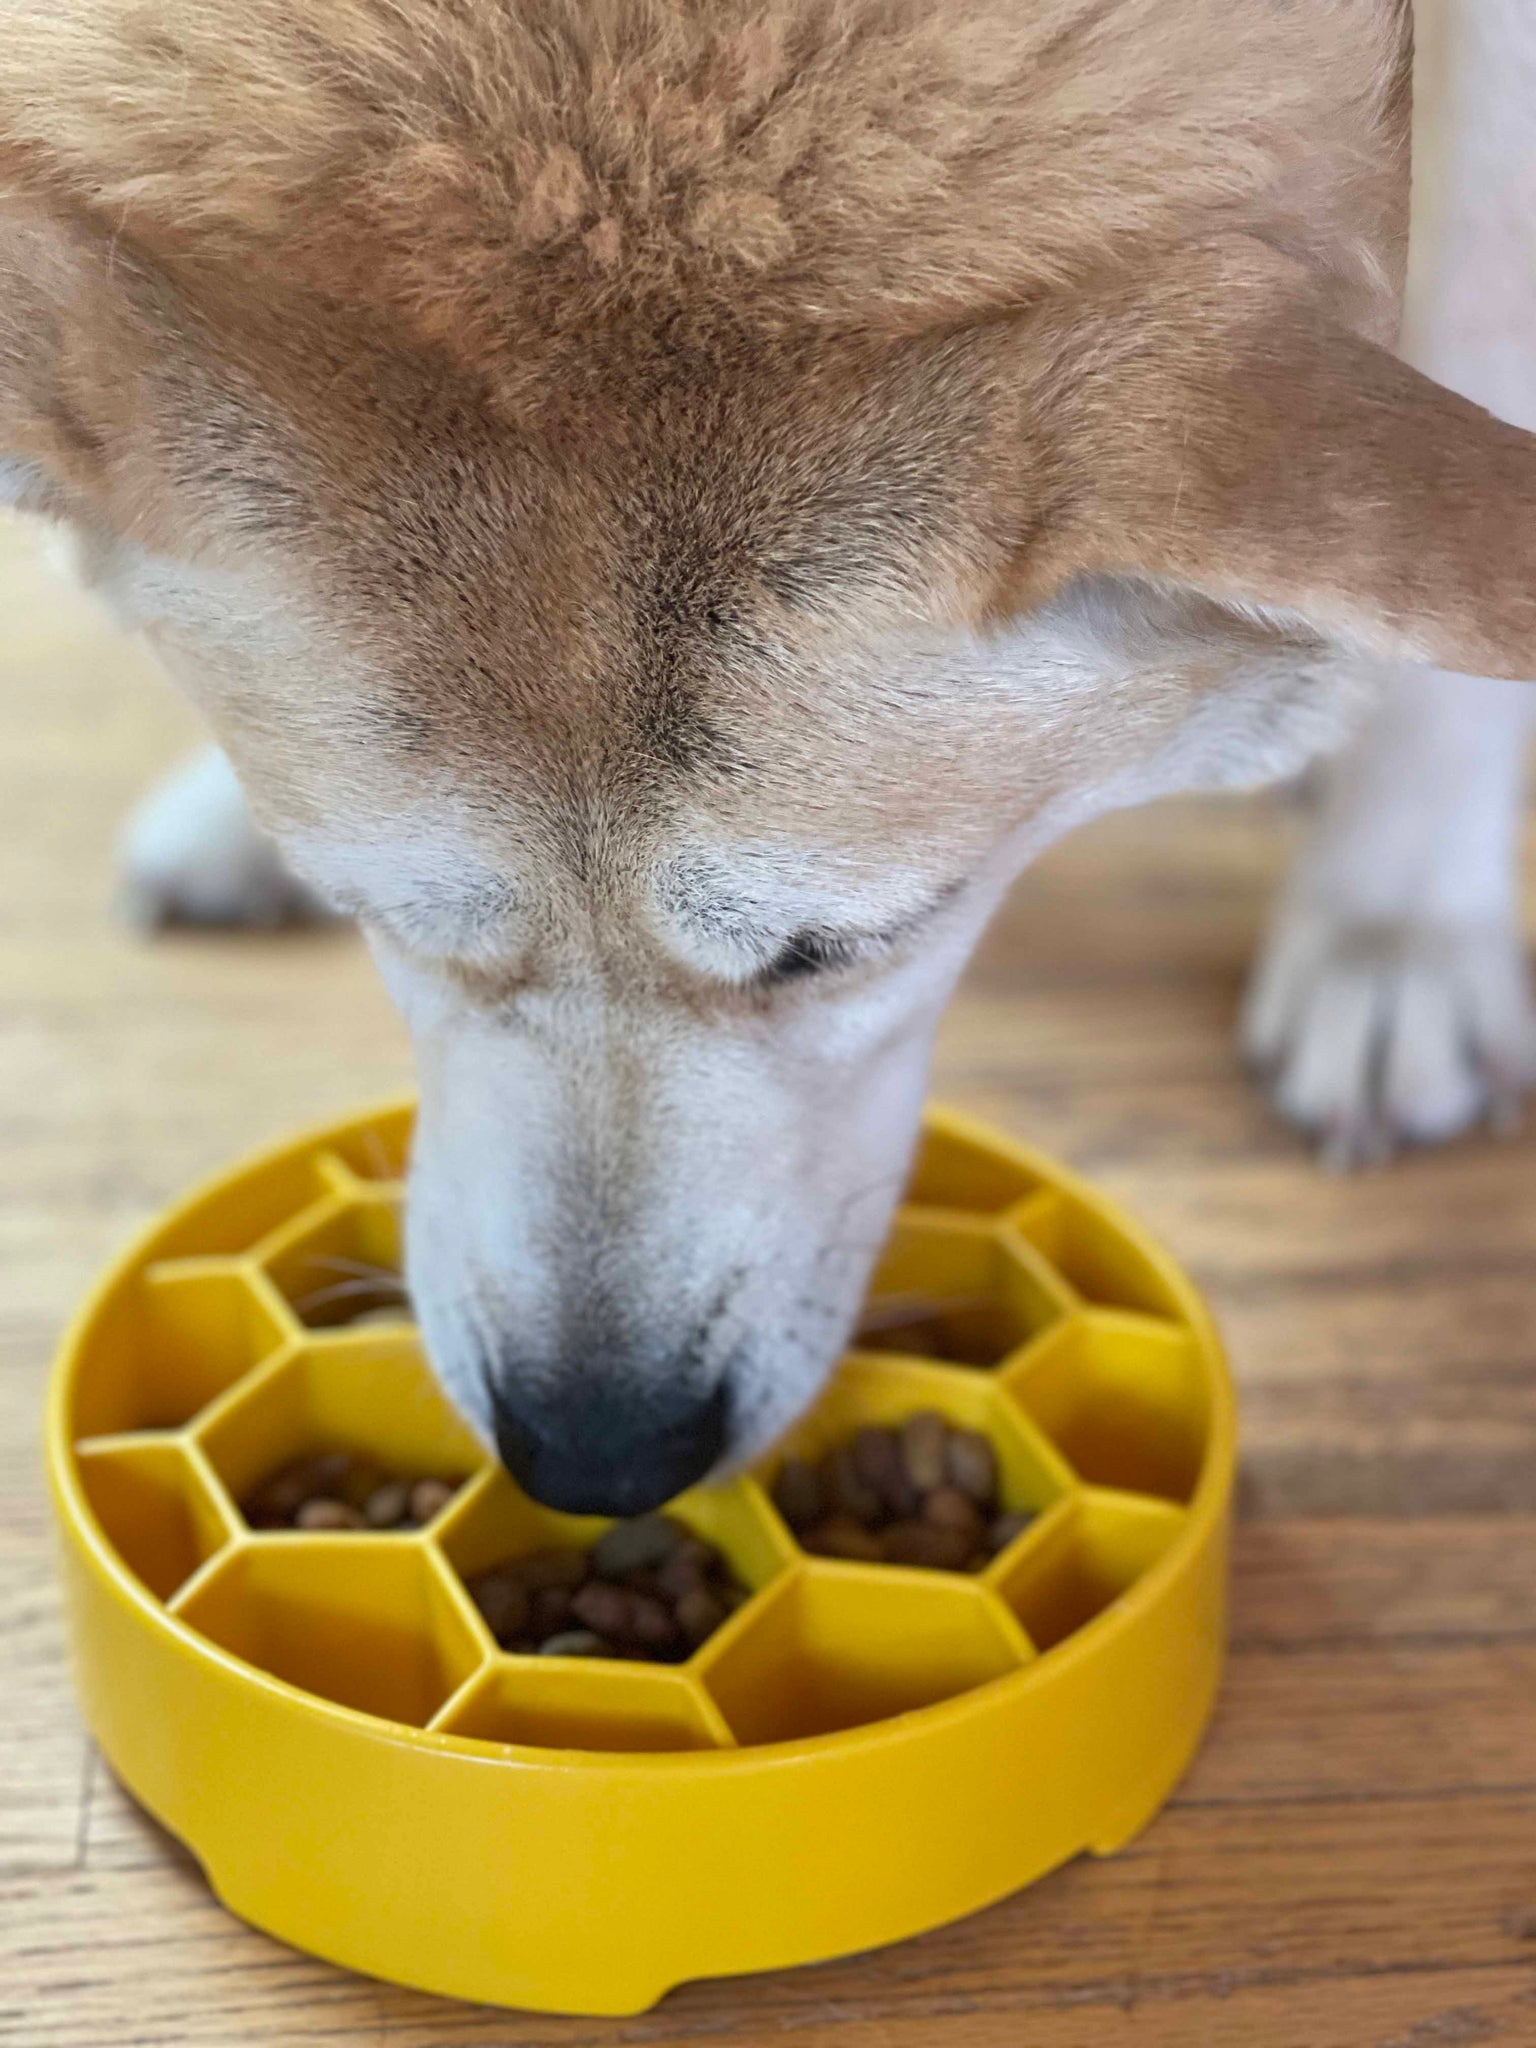 Honeycomb Design eBowl Enrichment Slow Feeder Bowl for Dogs